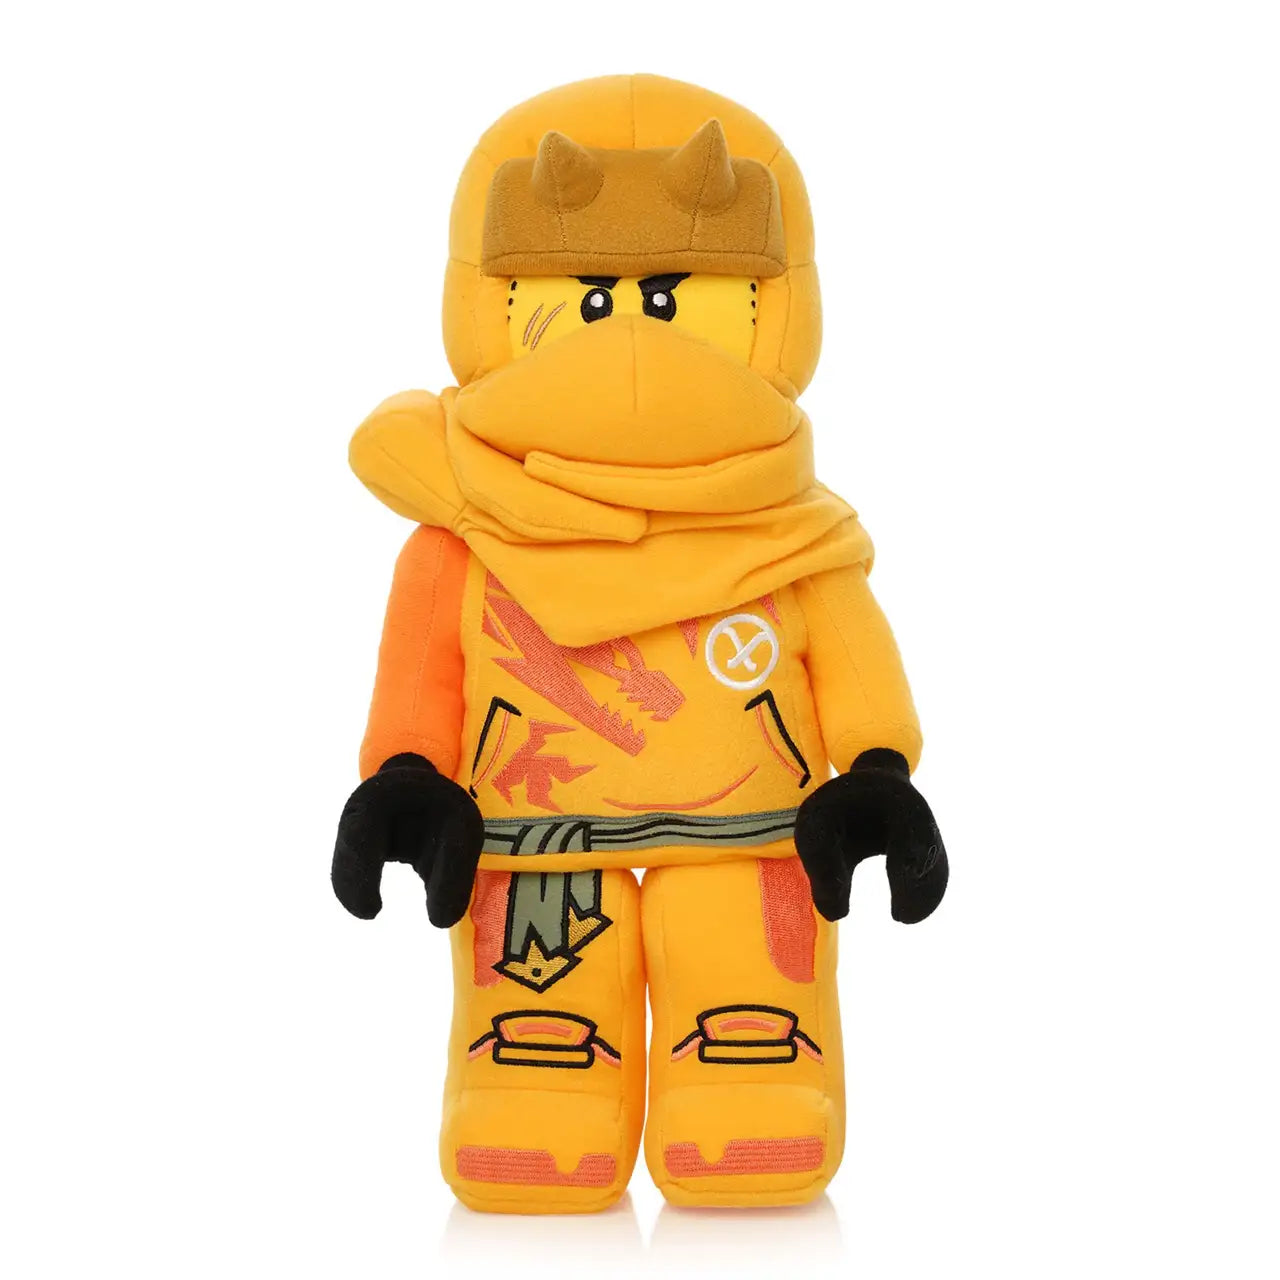 LEGO Ninjago Arin Plush Minifigure